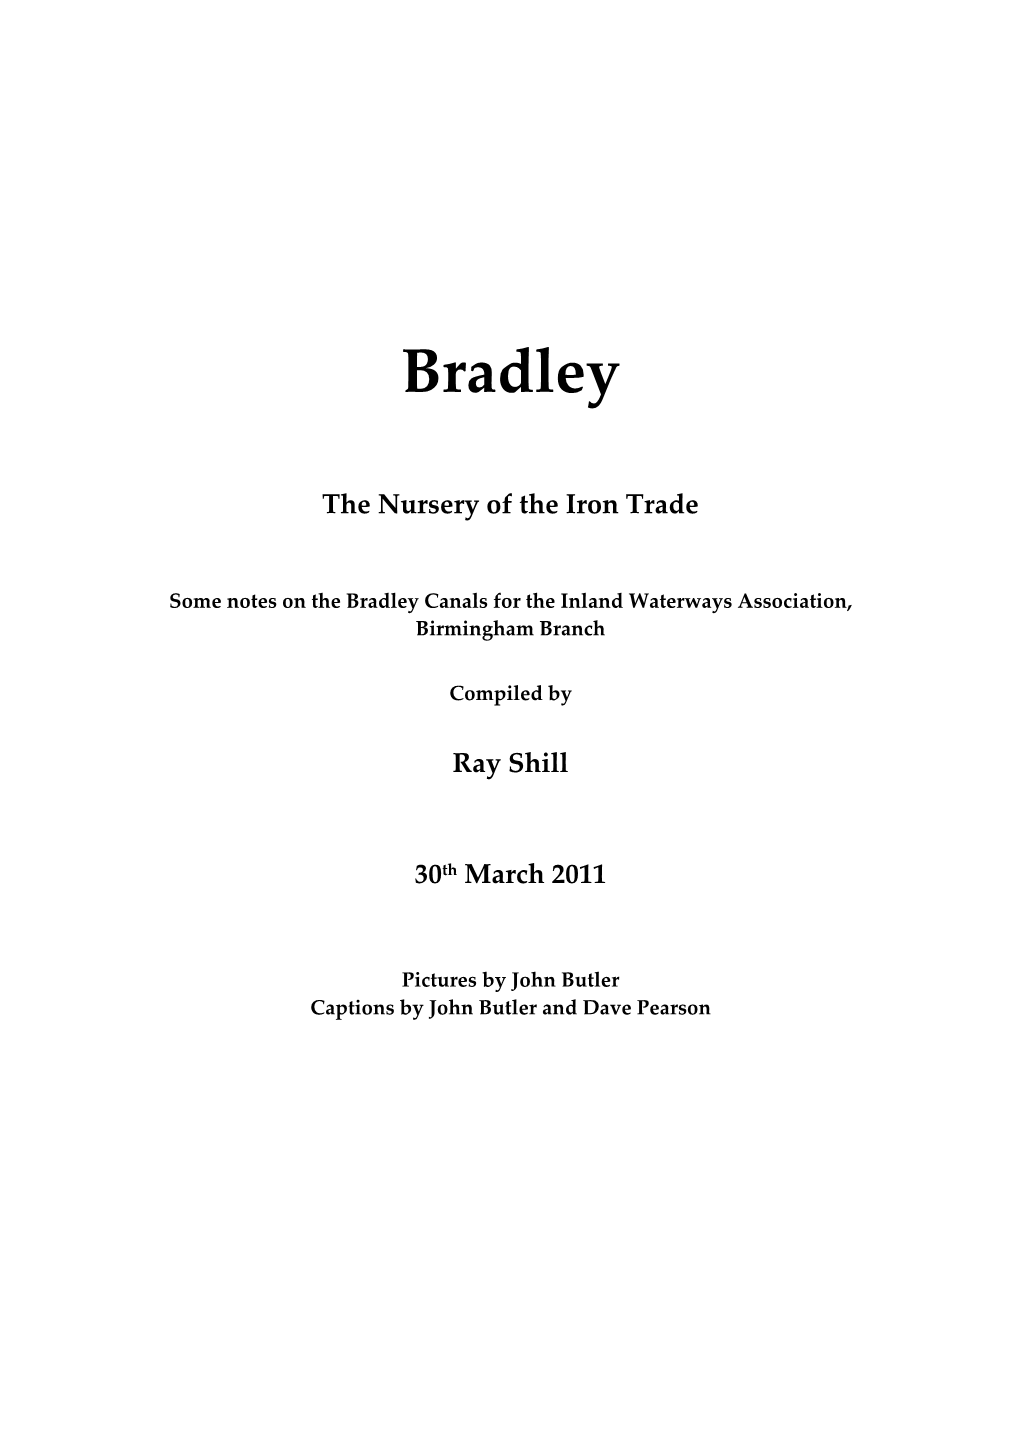 Bradley the Nursery of the Iron Trade